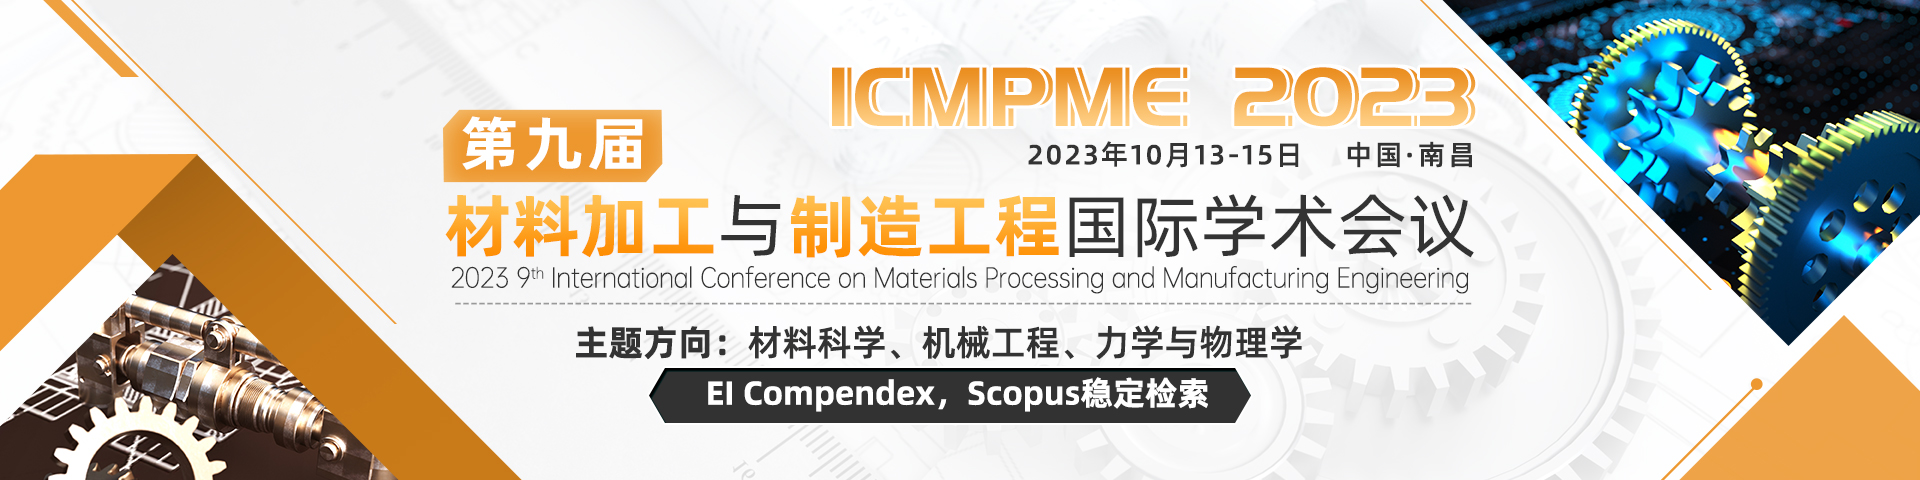 【EI/SCOPUS征稿】第九届材料加工与制造工程国际学术会议(ICMPME 2023)